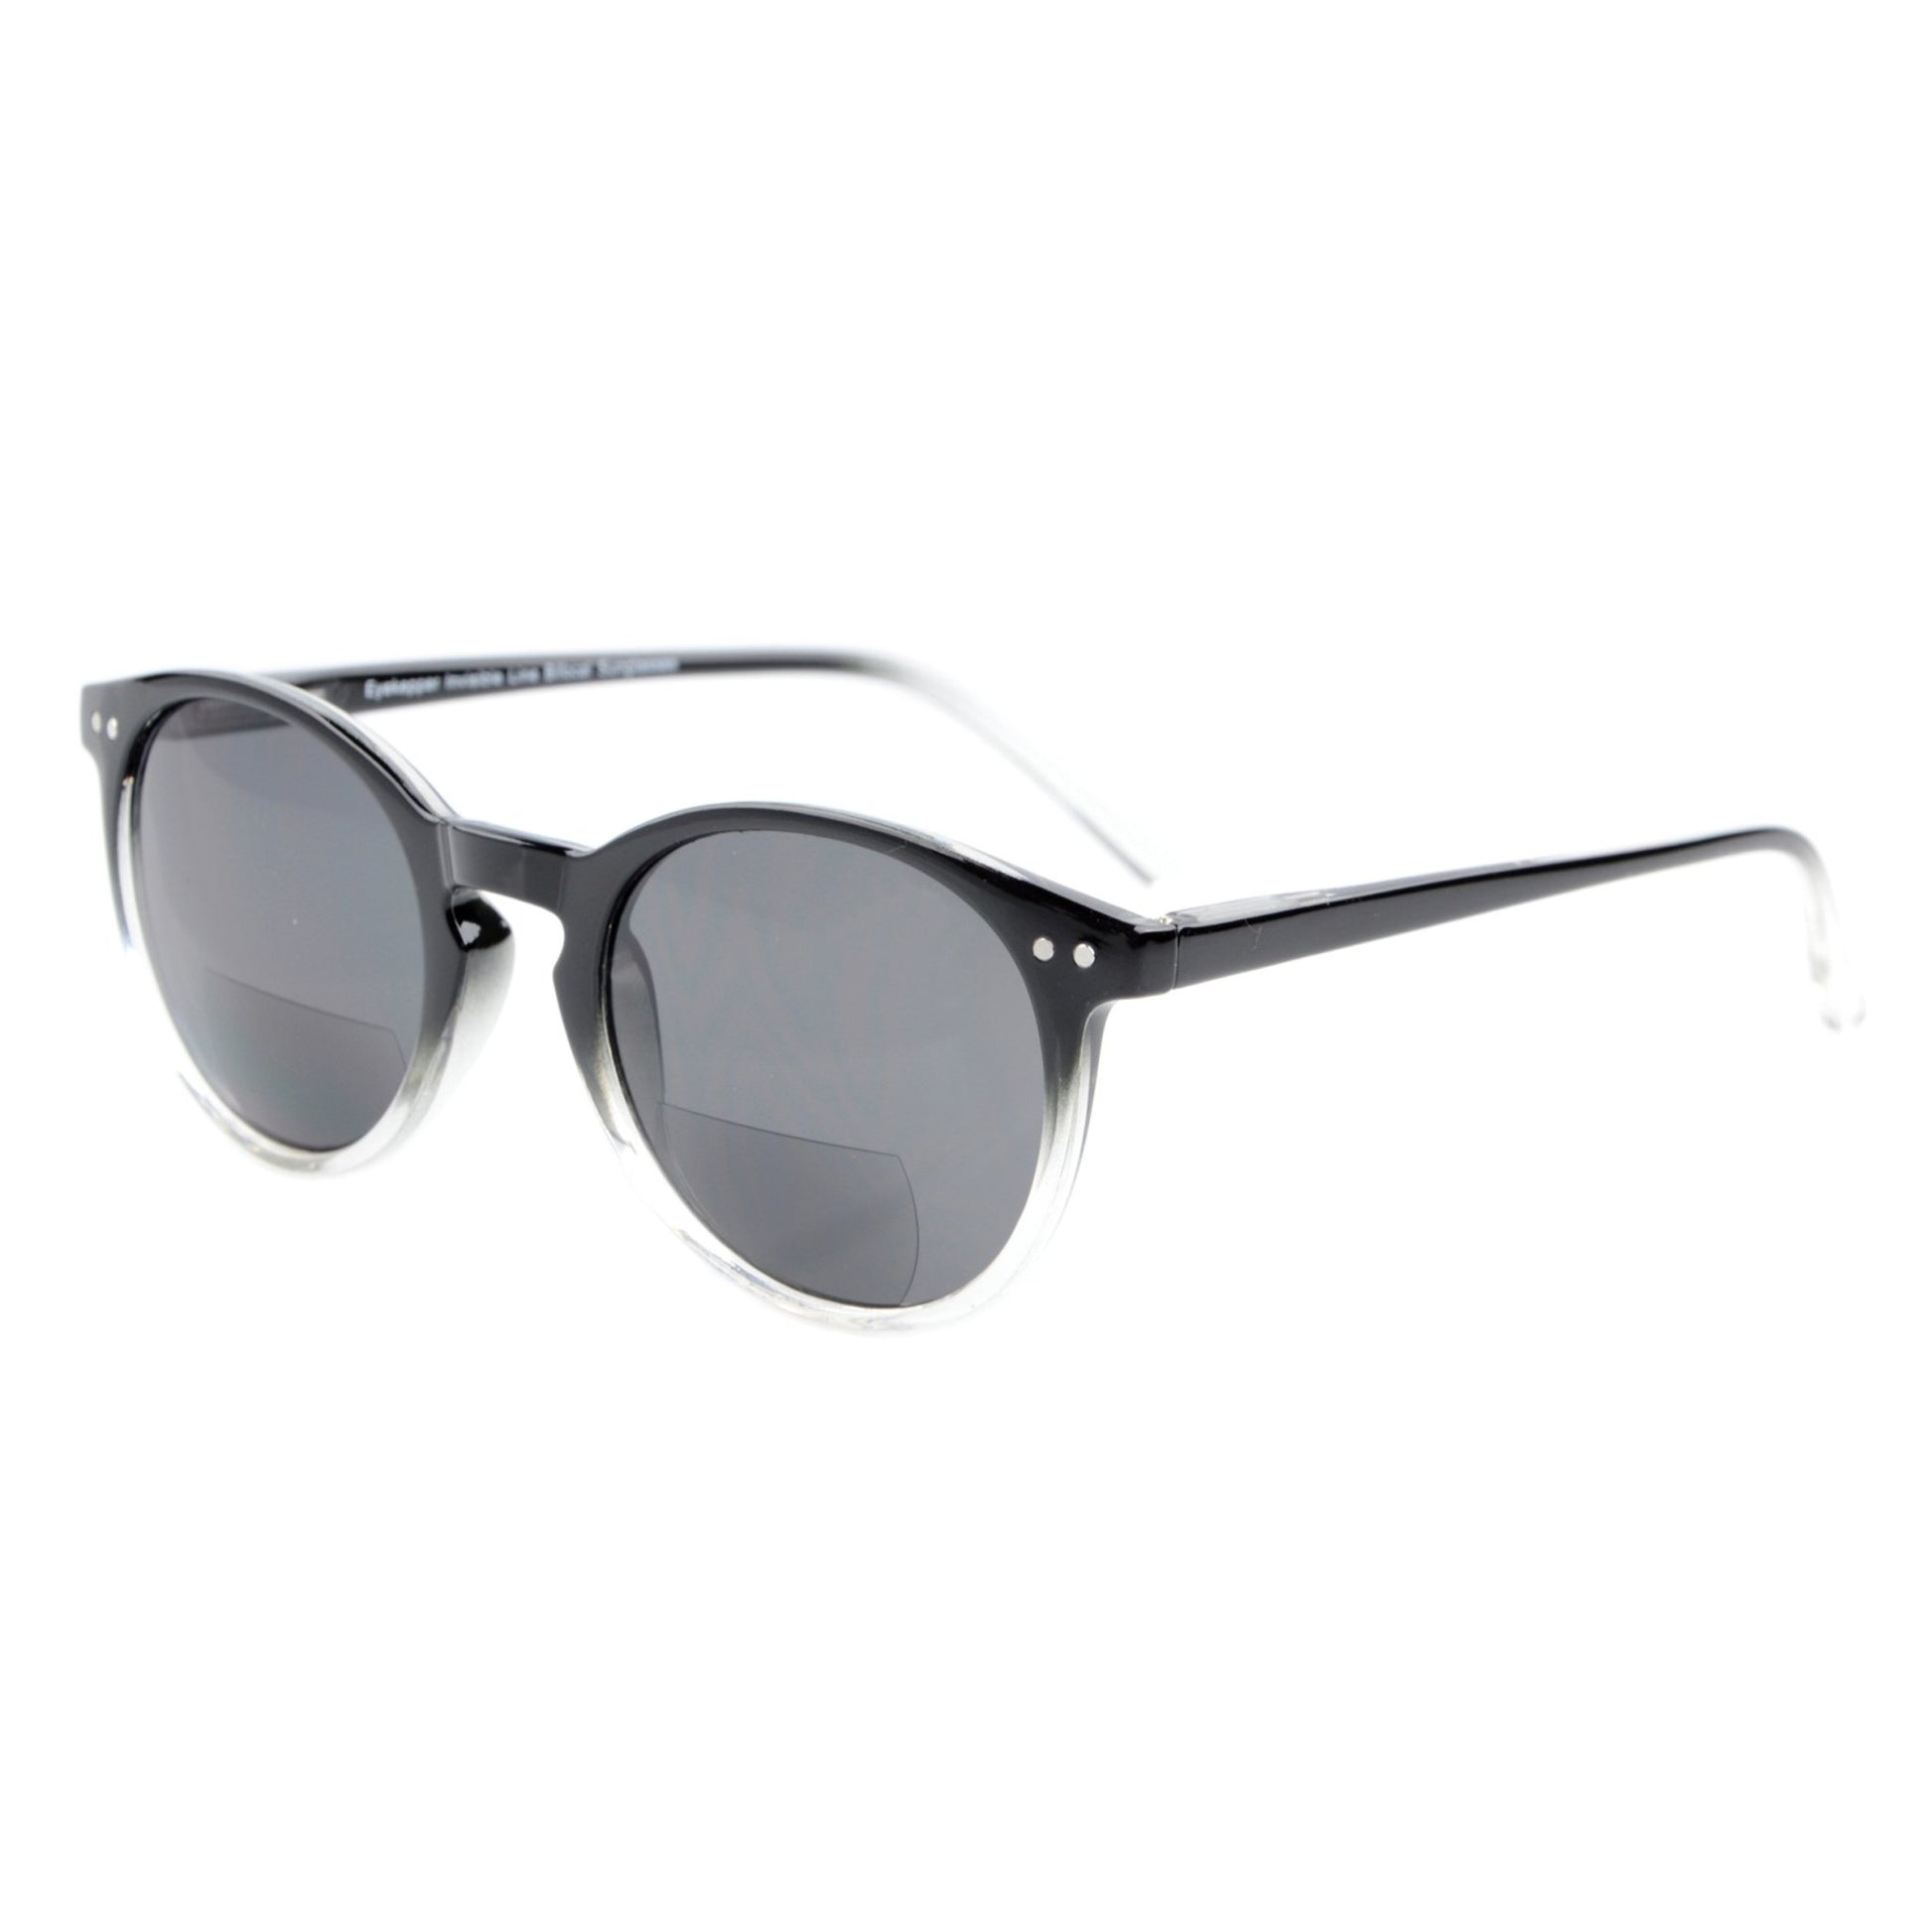 Key Hole Style Round Bifocal Sunglasses Black Clear S005